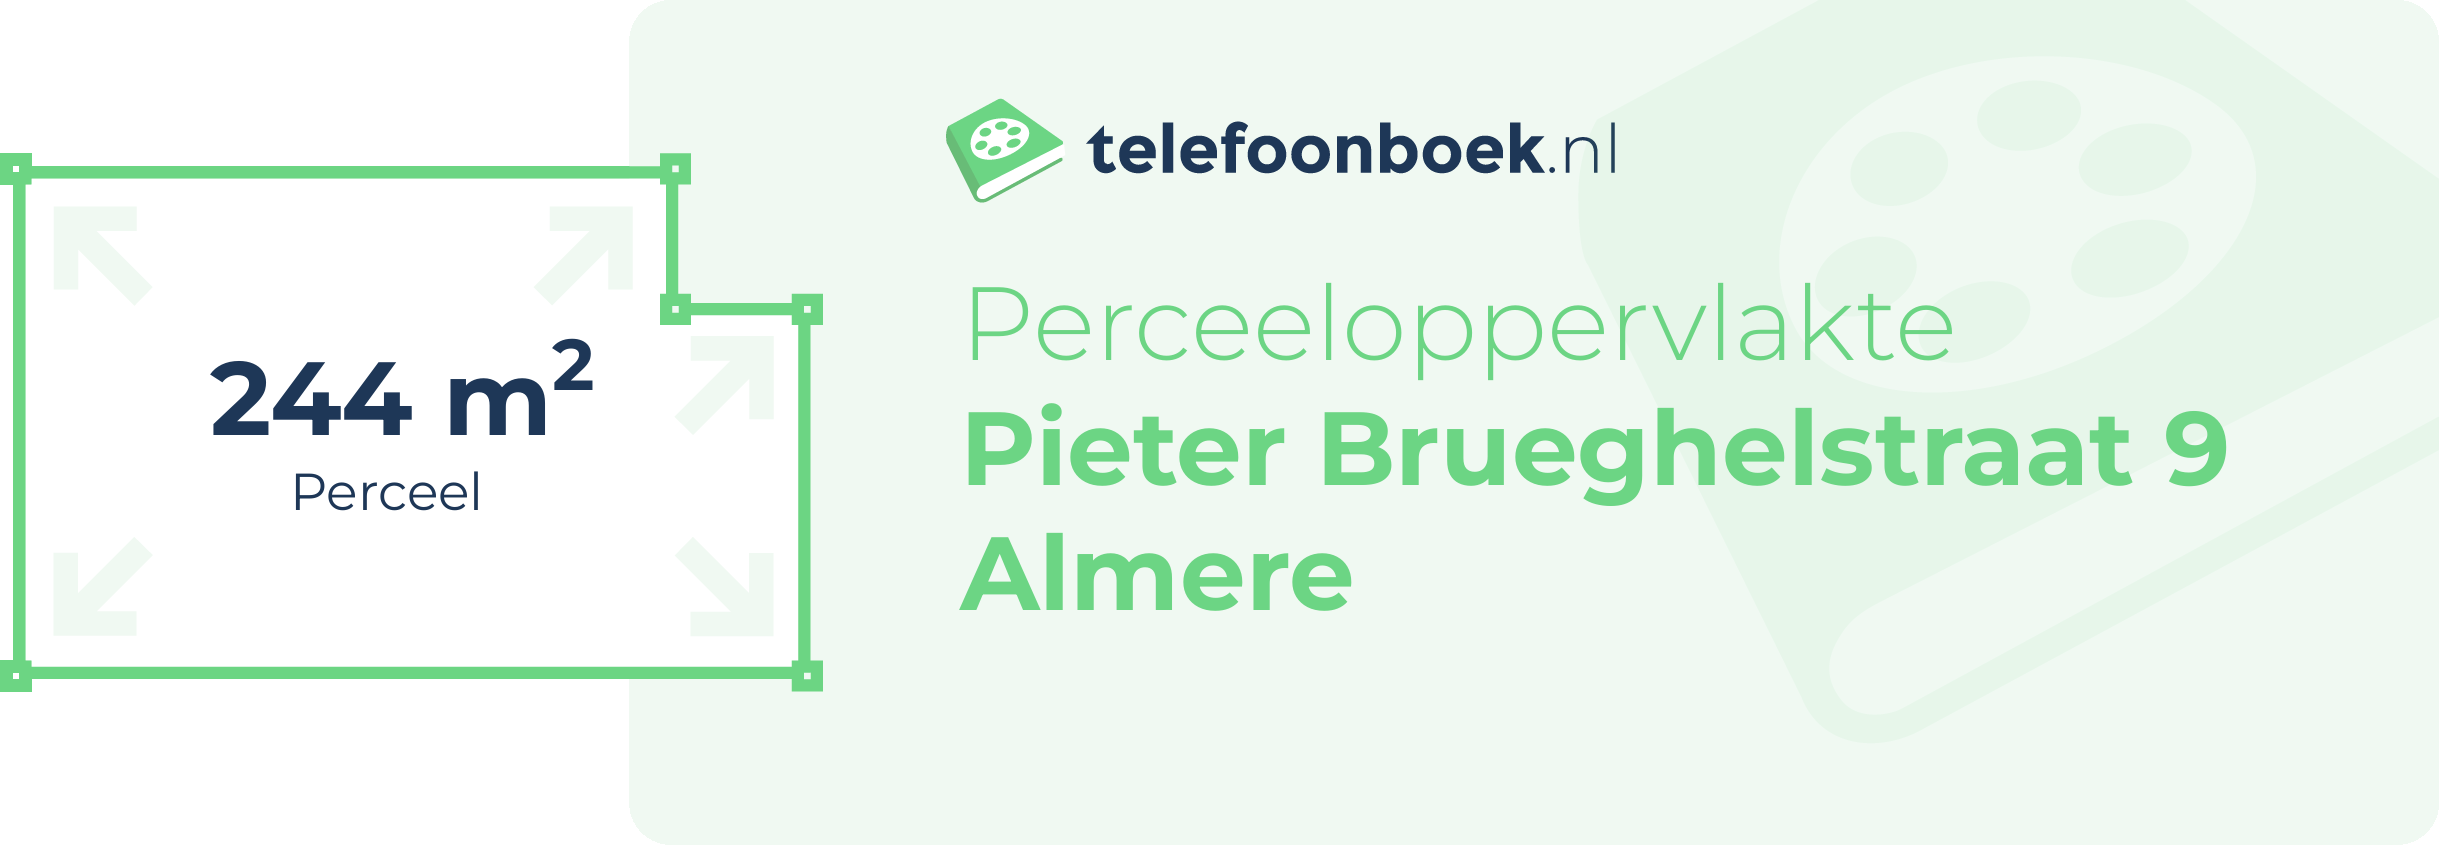 Perceeloppervlakte Pieter Brueghelstraat 9 Almere